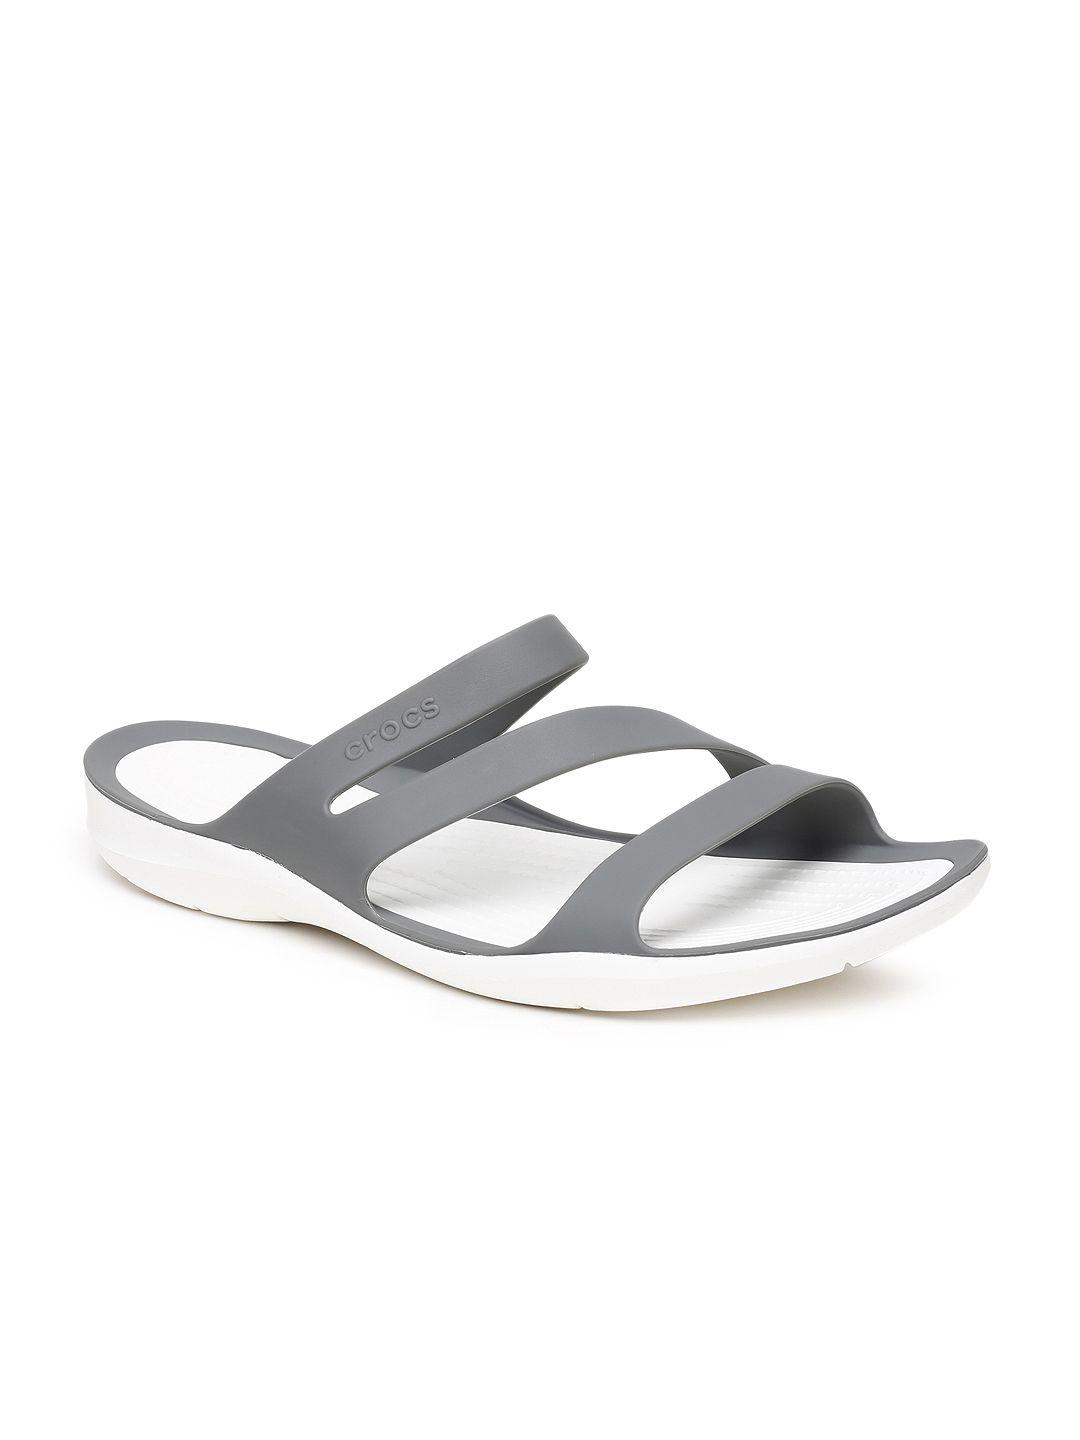 crocs-women-grey-solid-synthetic-open-toe-flats